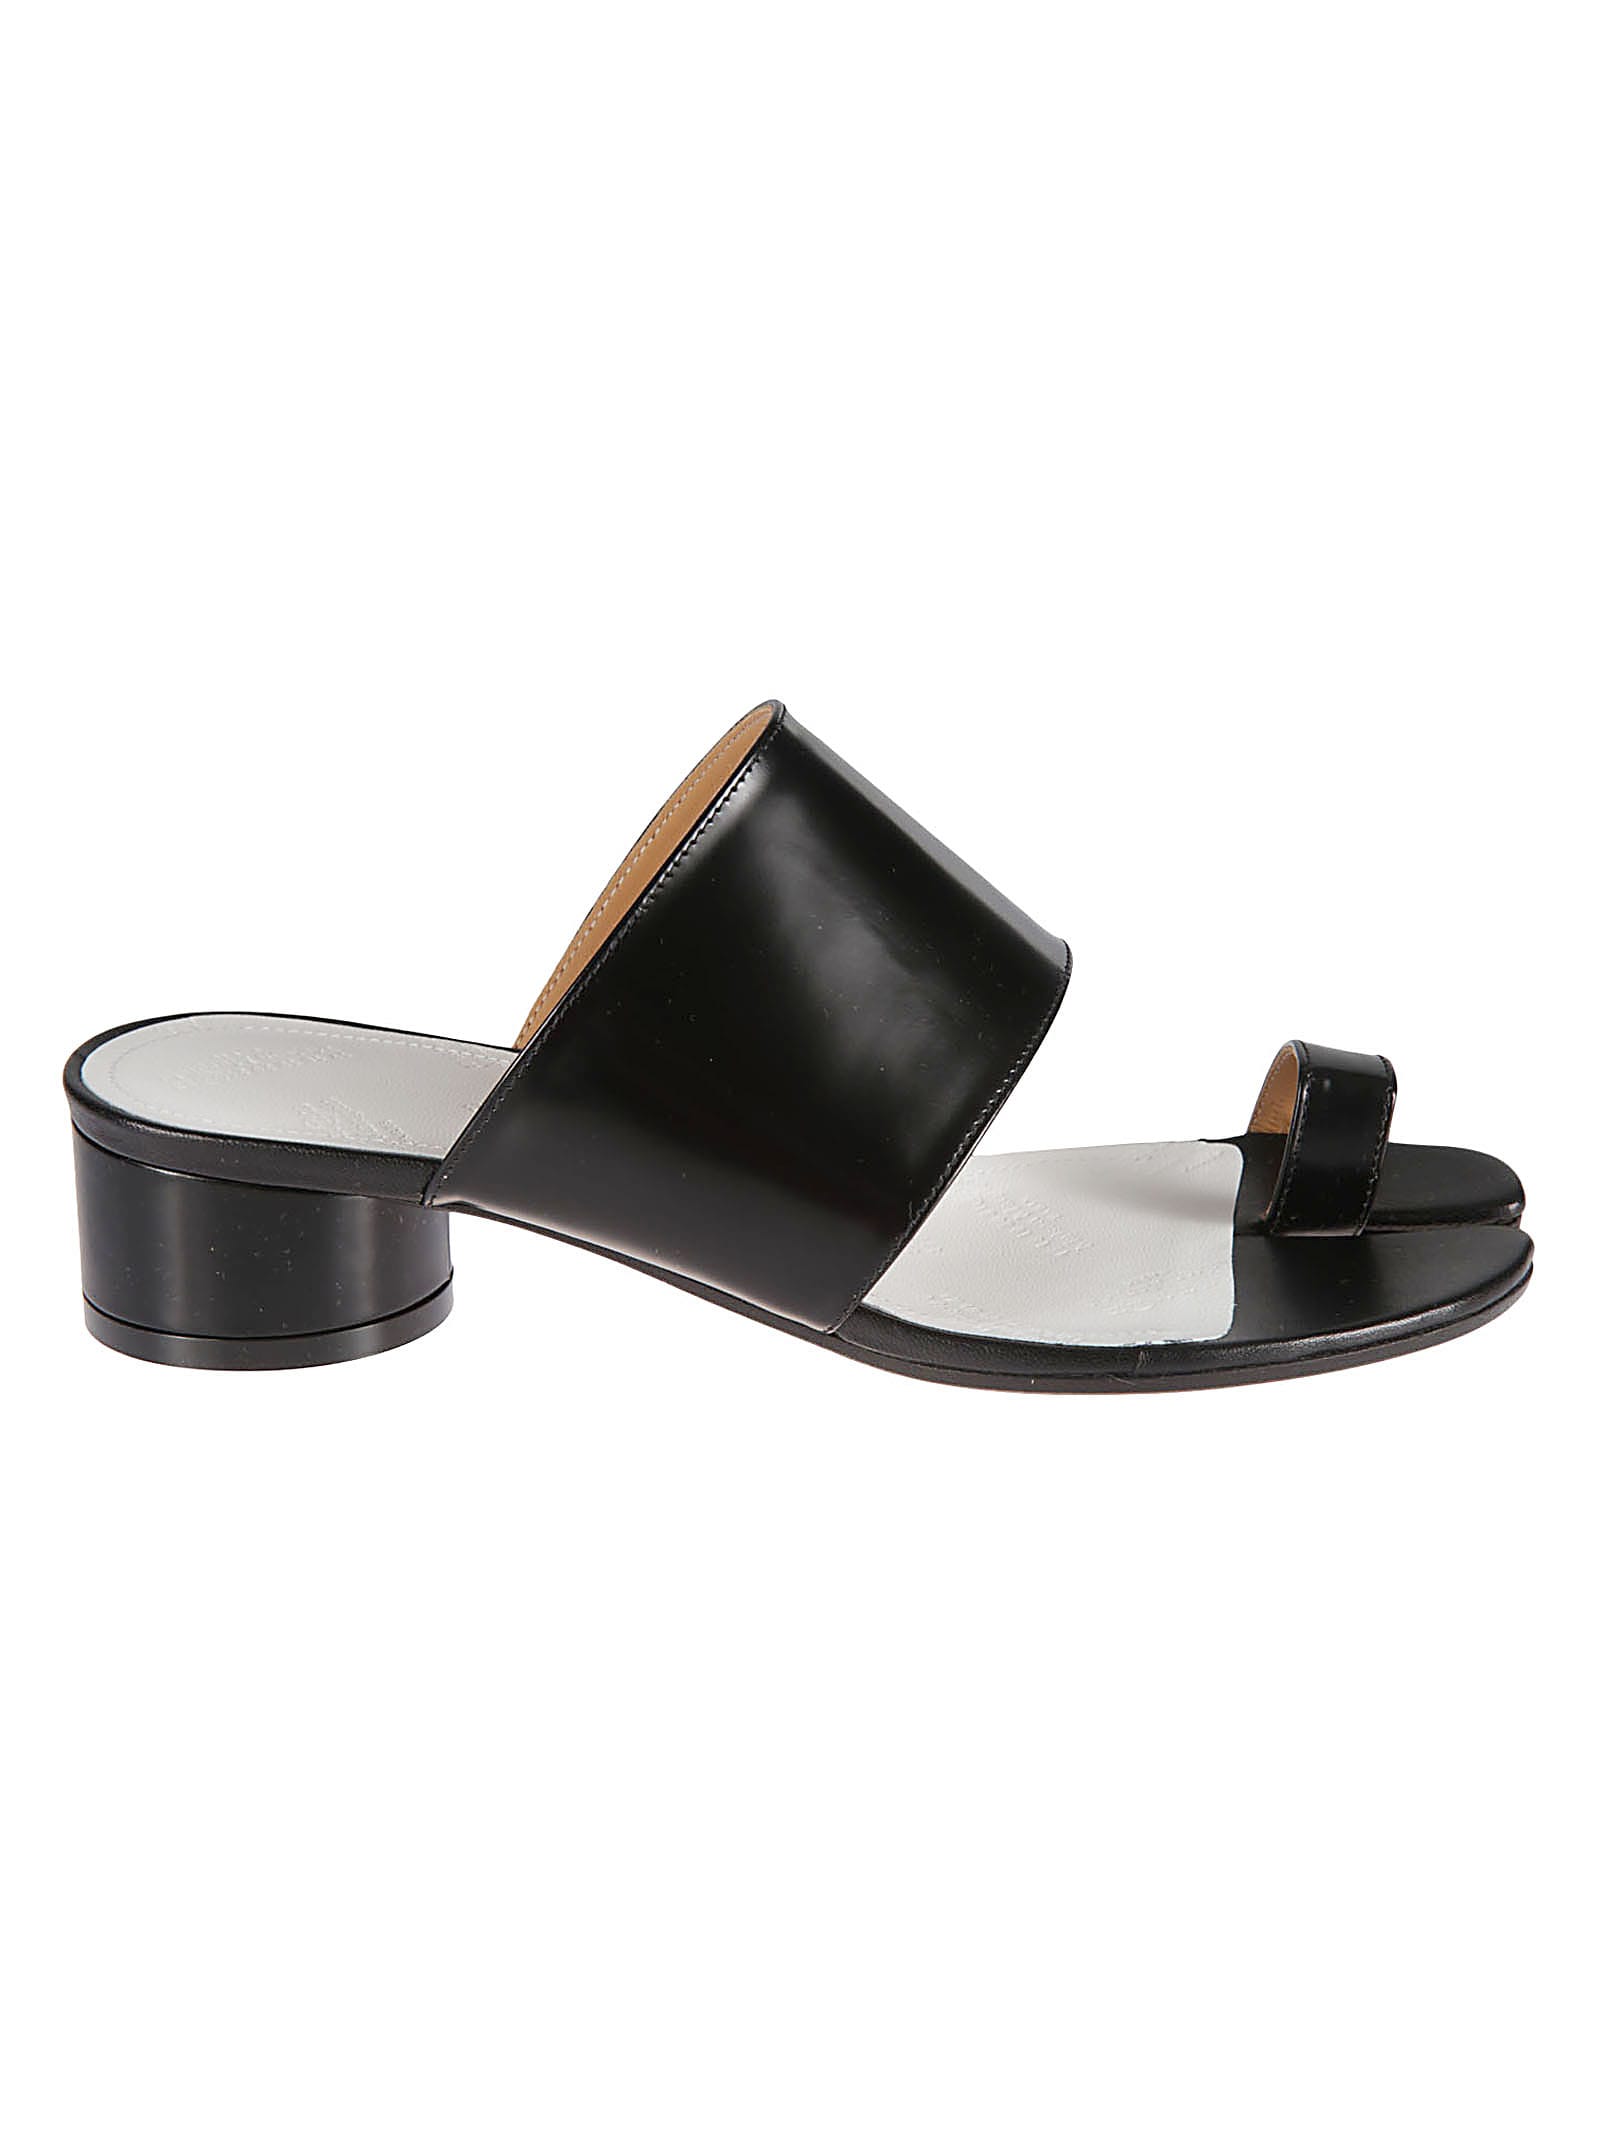 Buy Maison Margiela Cleft Toe Sandals online, shop Maison Margiela shoes with free shipping